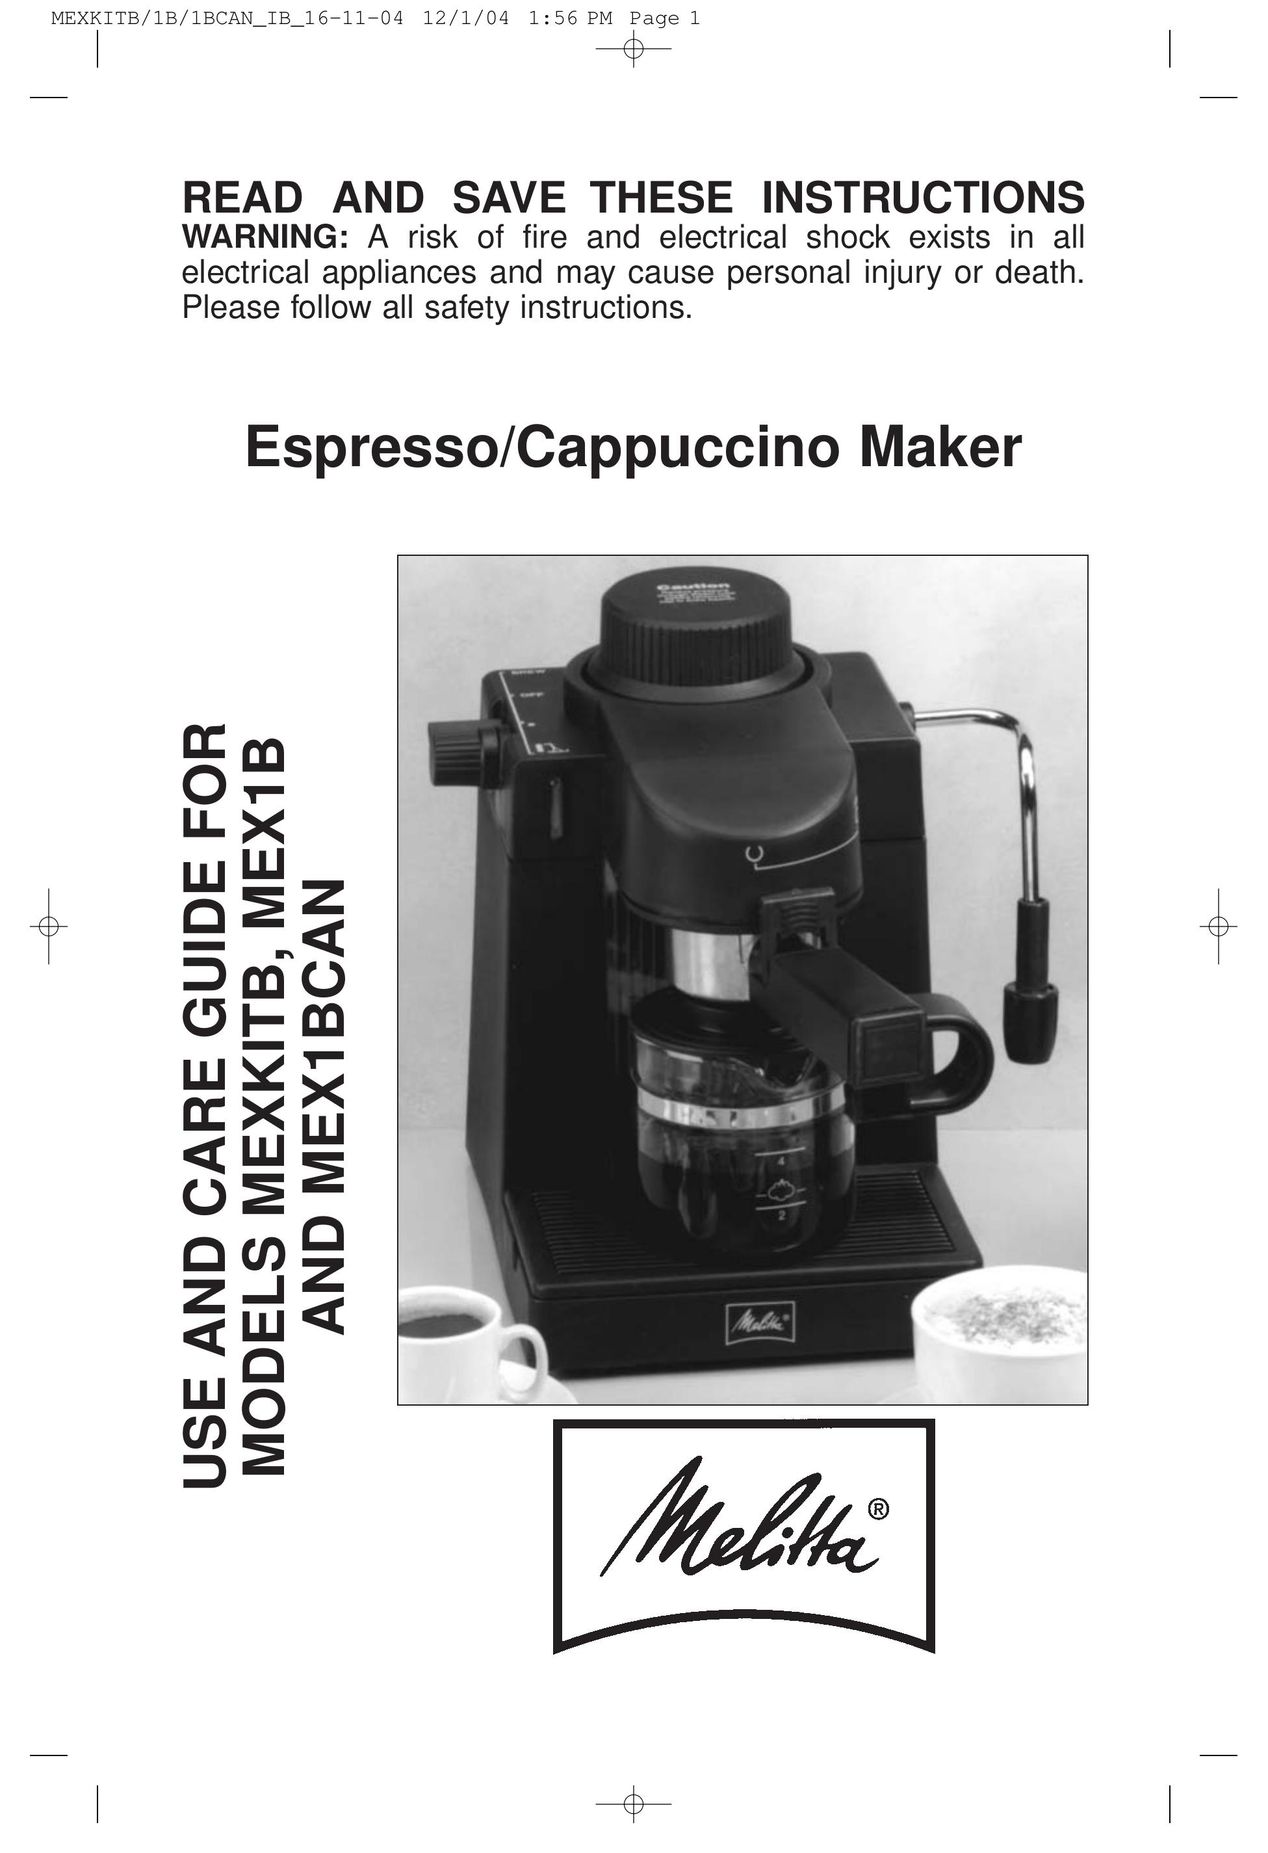 Toastmaster MEXKITB, MEX1B, MEX1BCAN Espresso Maker User Manual